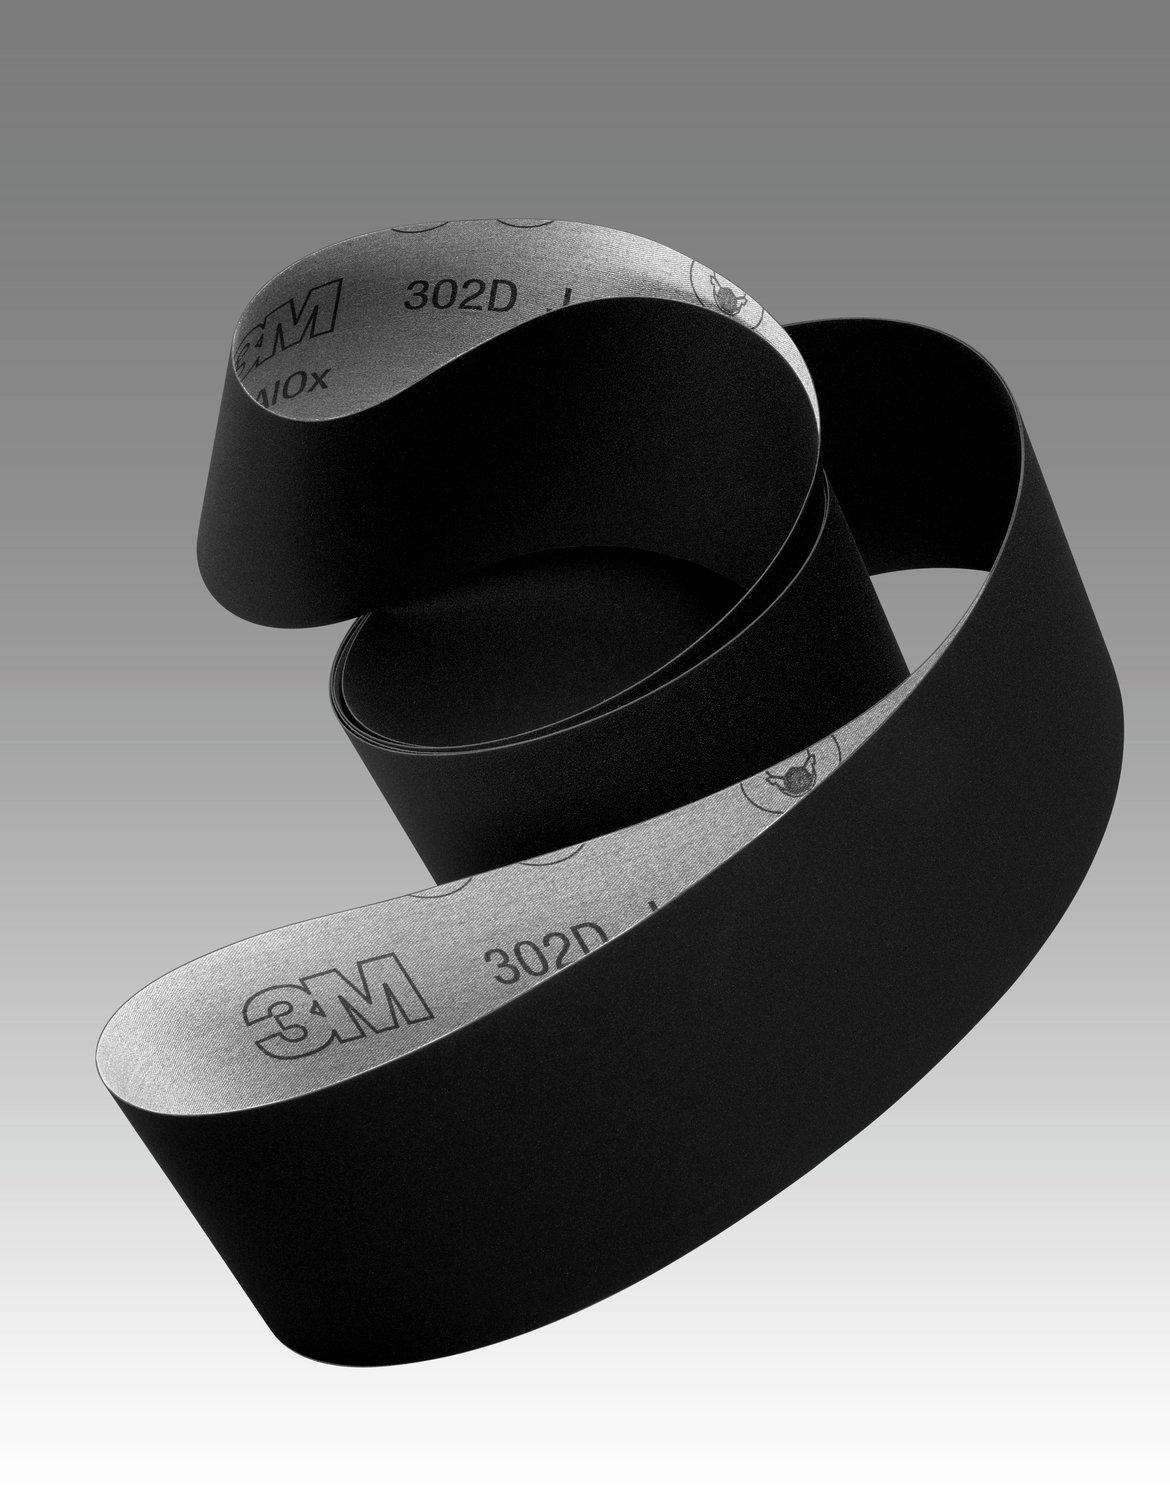 7100159573 - Scotch-Brite SL Surface Conditioning Belt, 10 in x 9-3/4 in, A CRS
Super Duty, 20 ea/Case